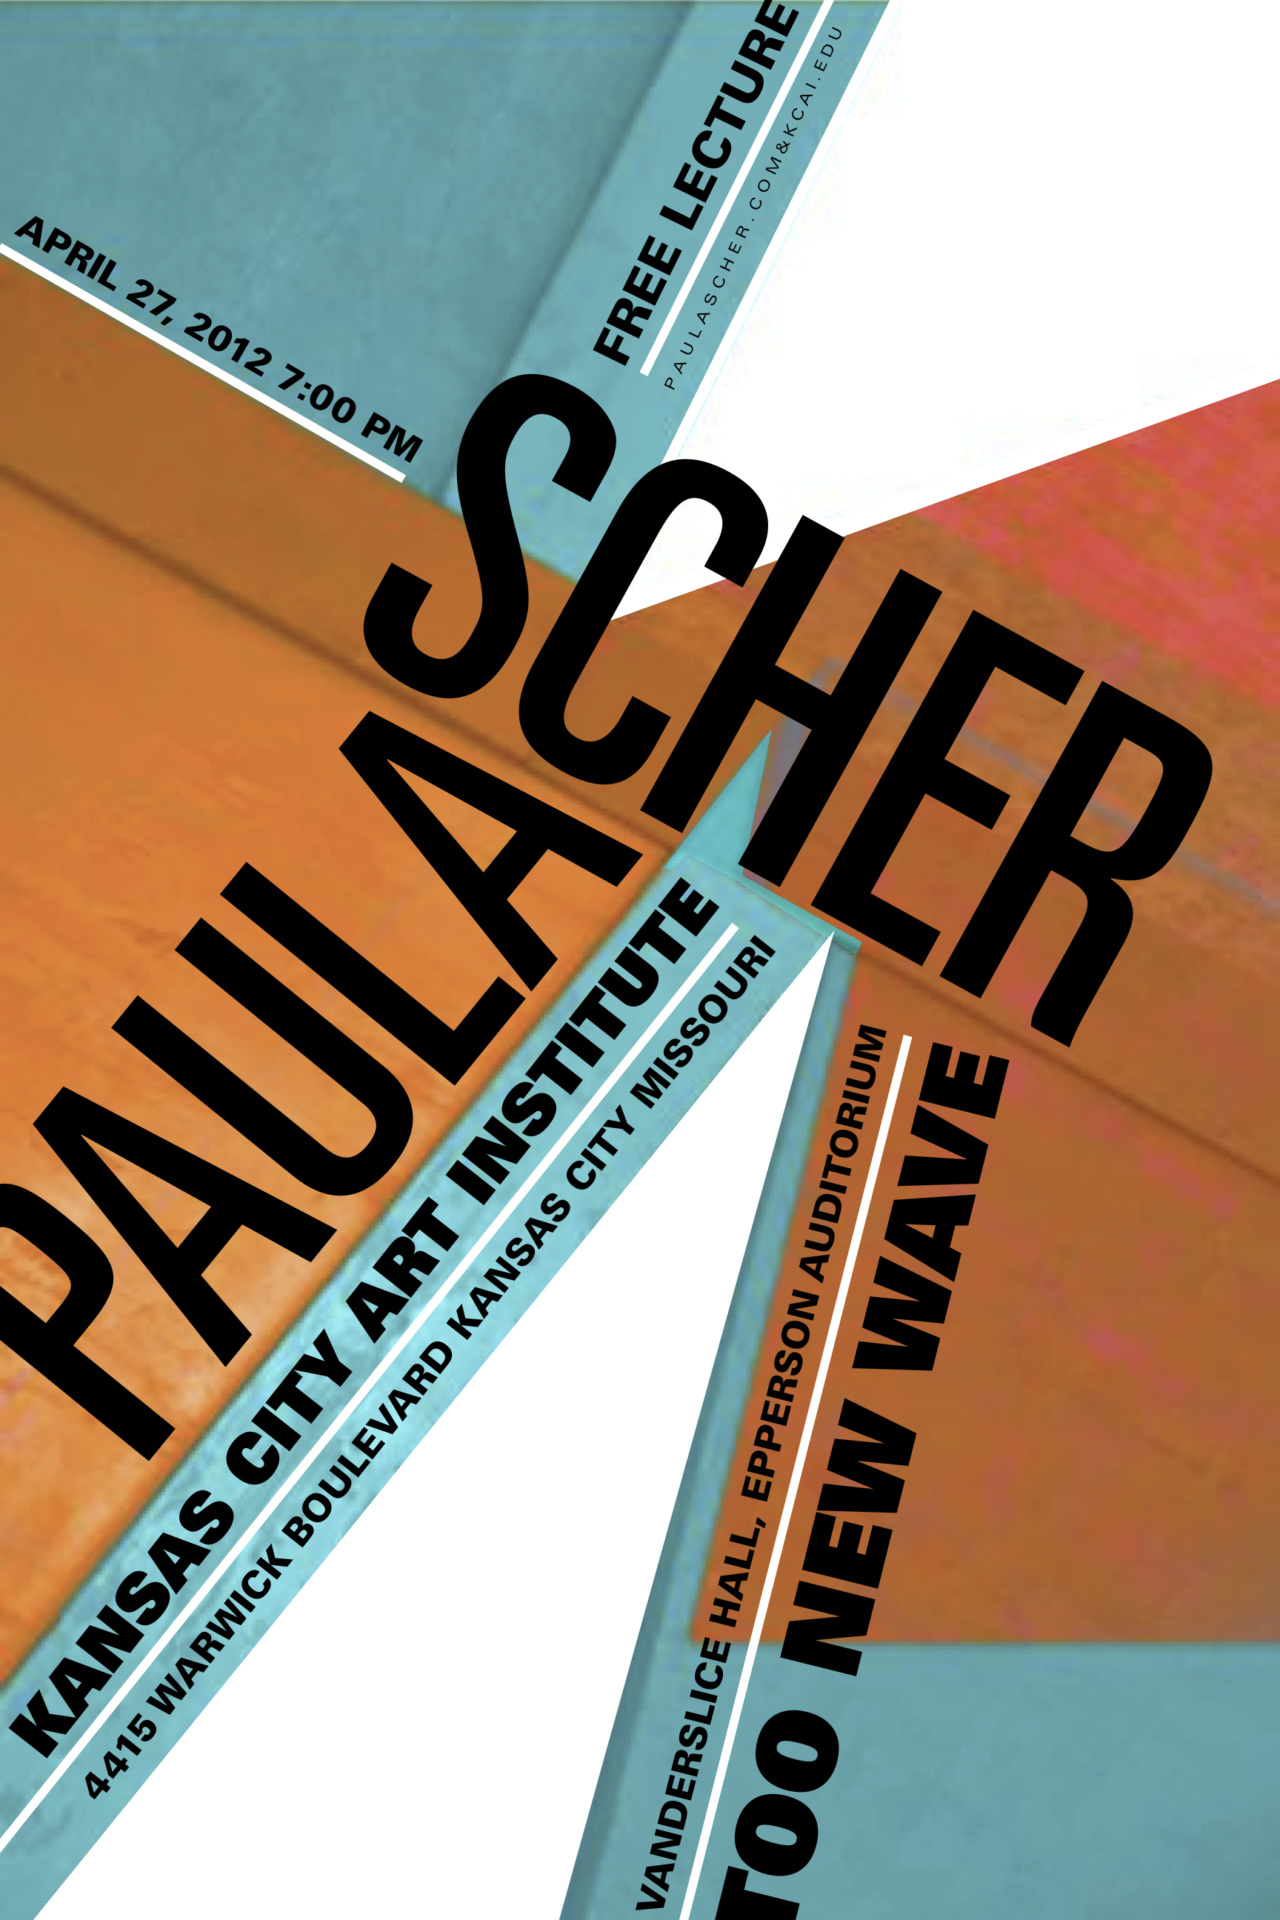 PAULA SCHER LECTURE